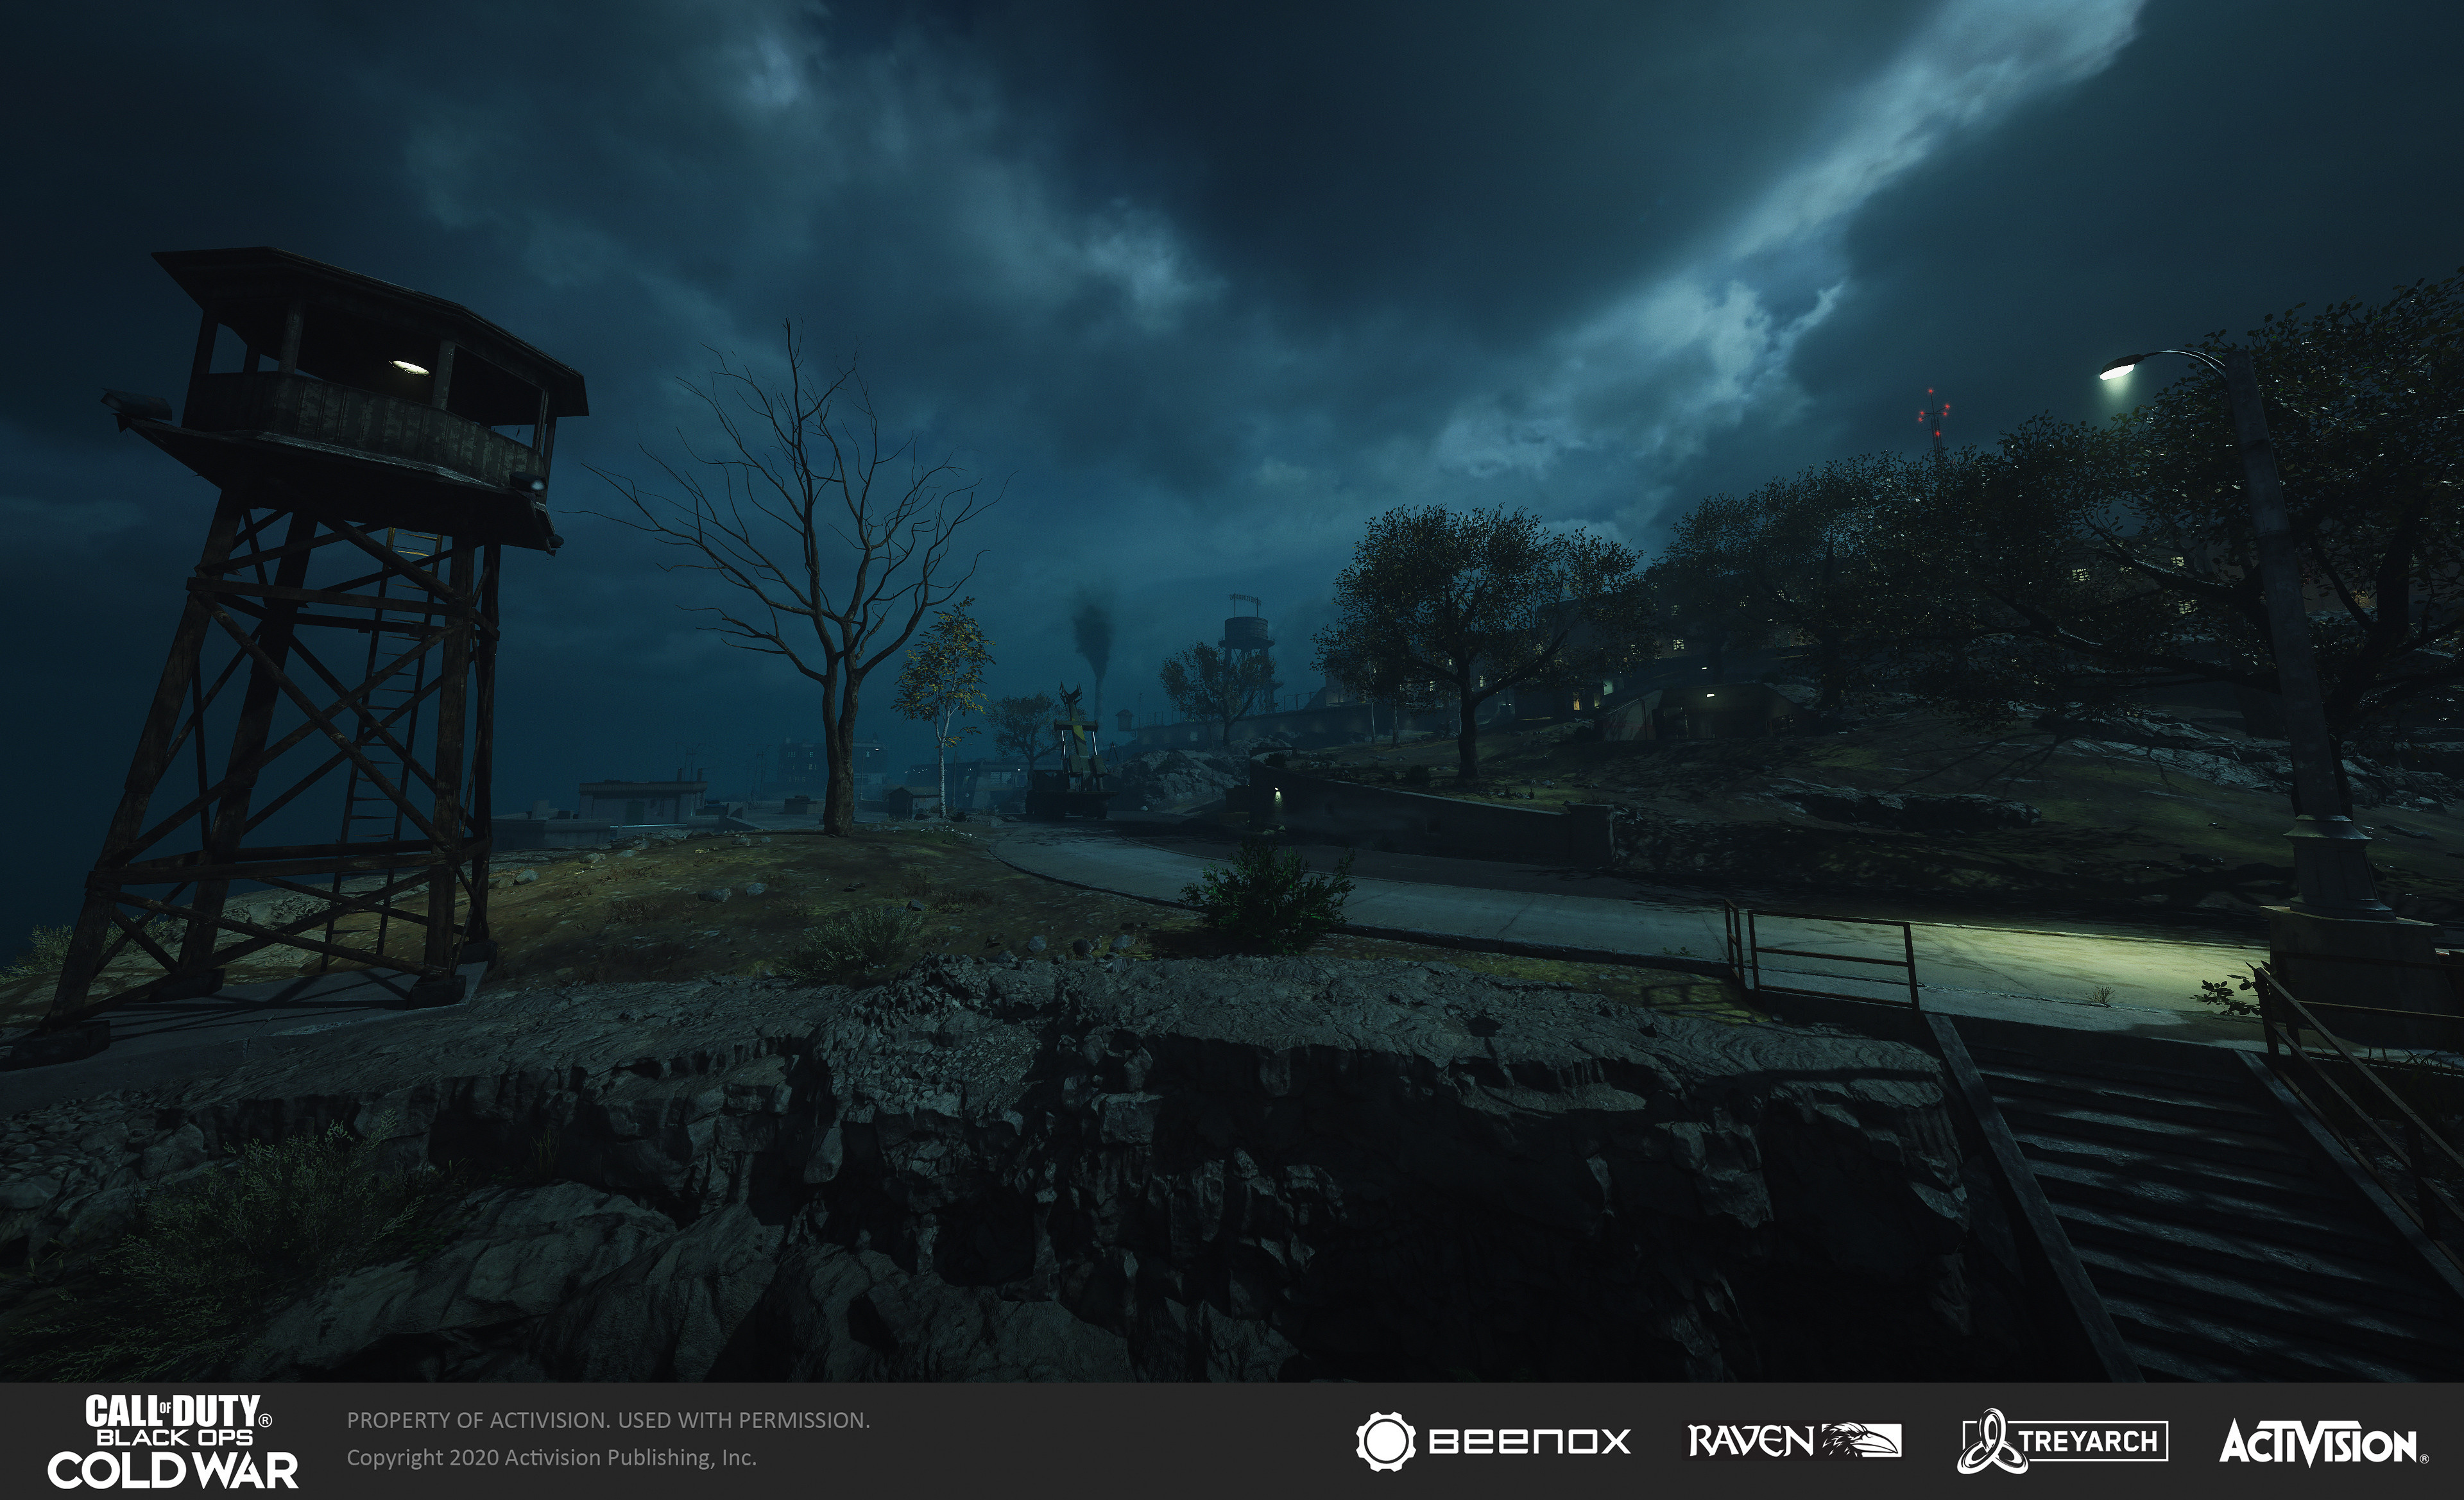 ArtStation - Call of Duty Warzone: Rebirth Island Night & Event